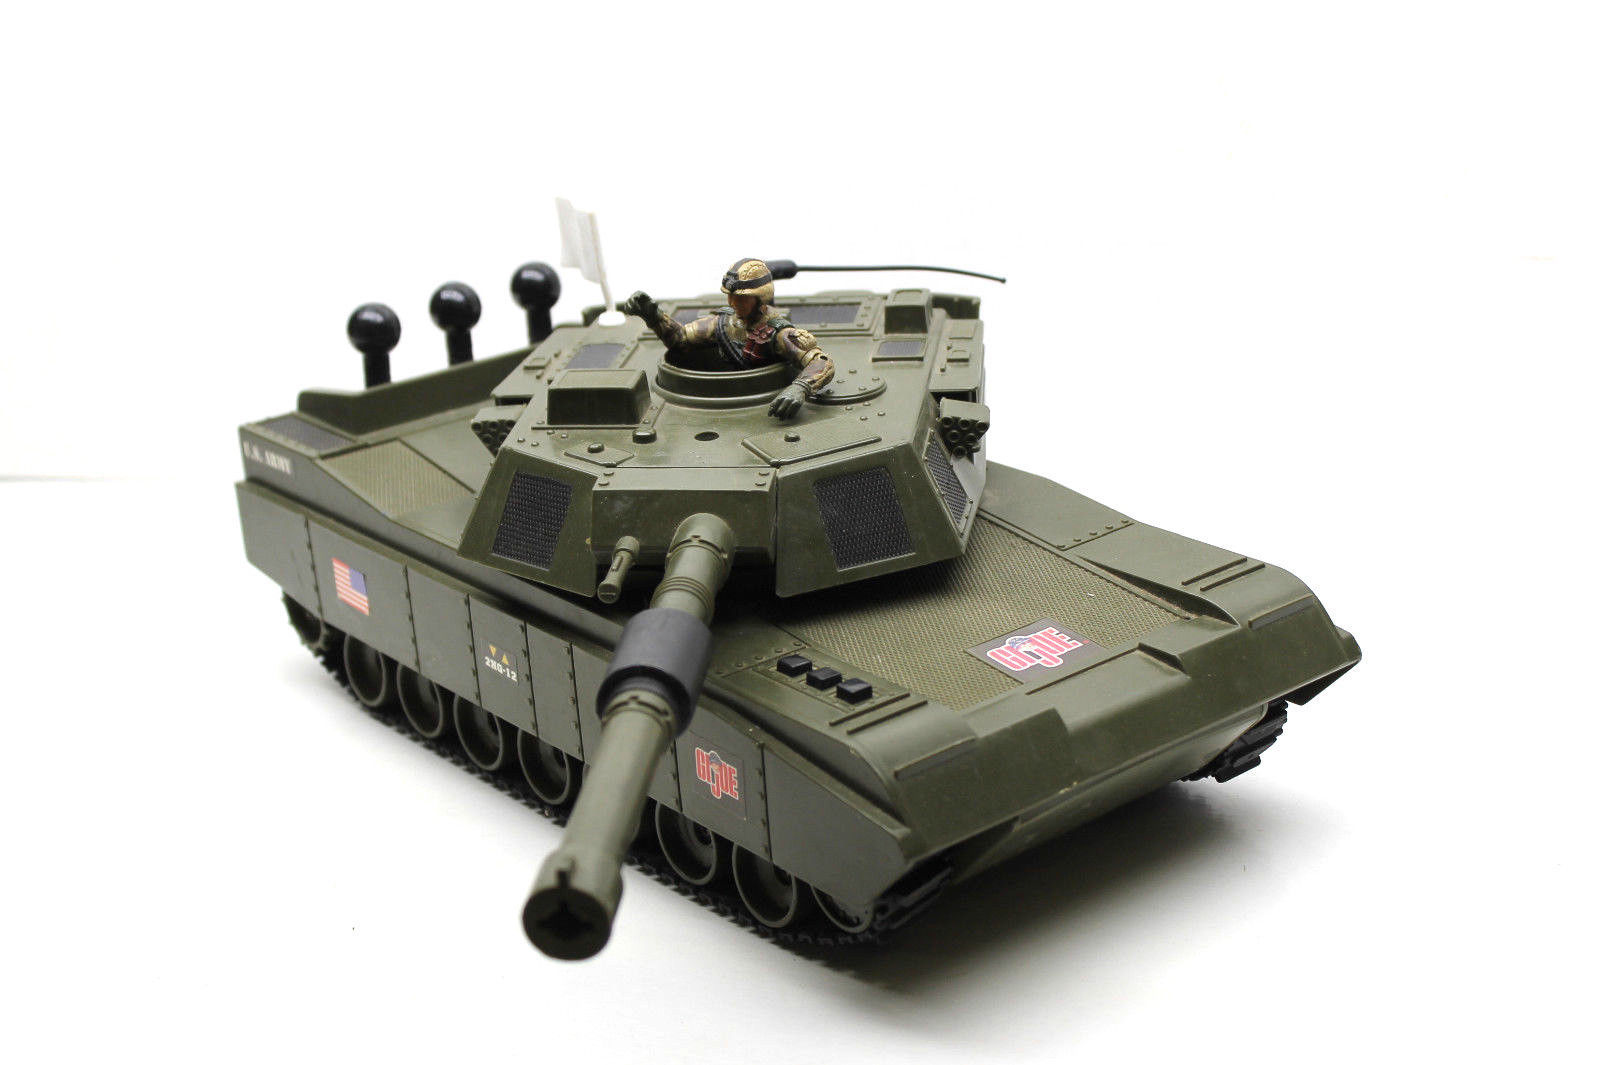 GI Joe US Army Tank 2HQ-12 Hasbro Vintage and 50 similar items